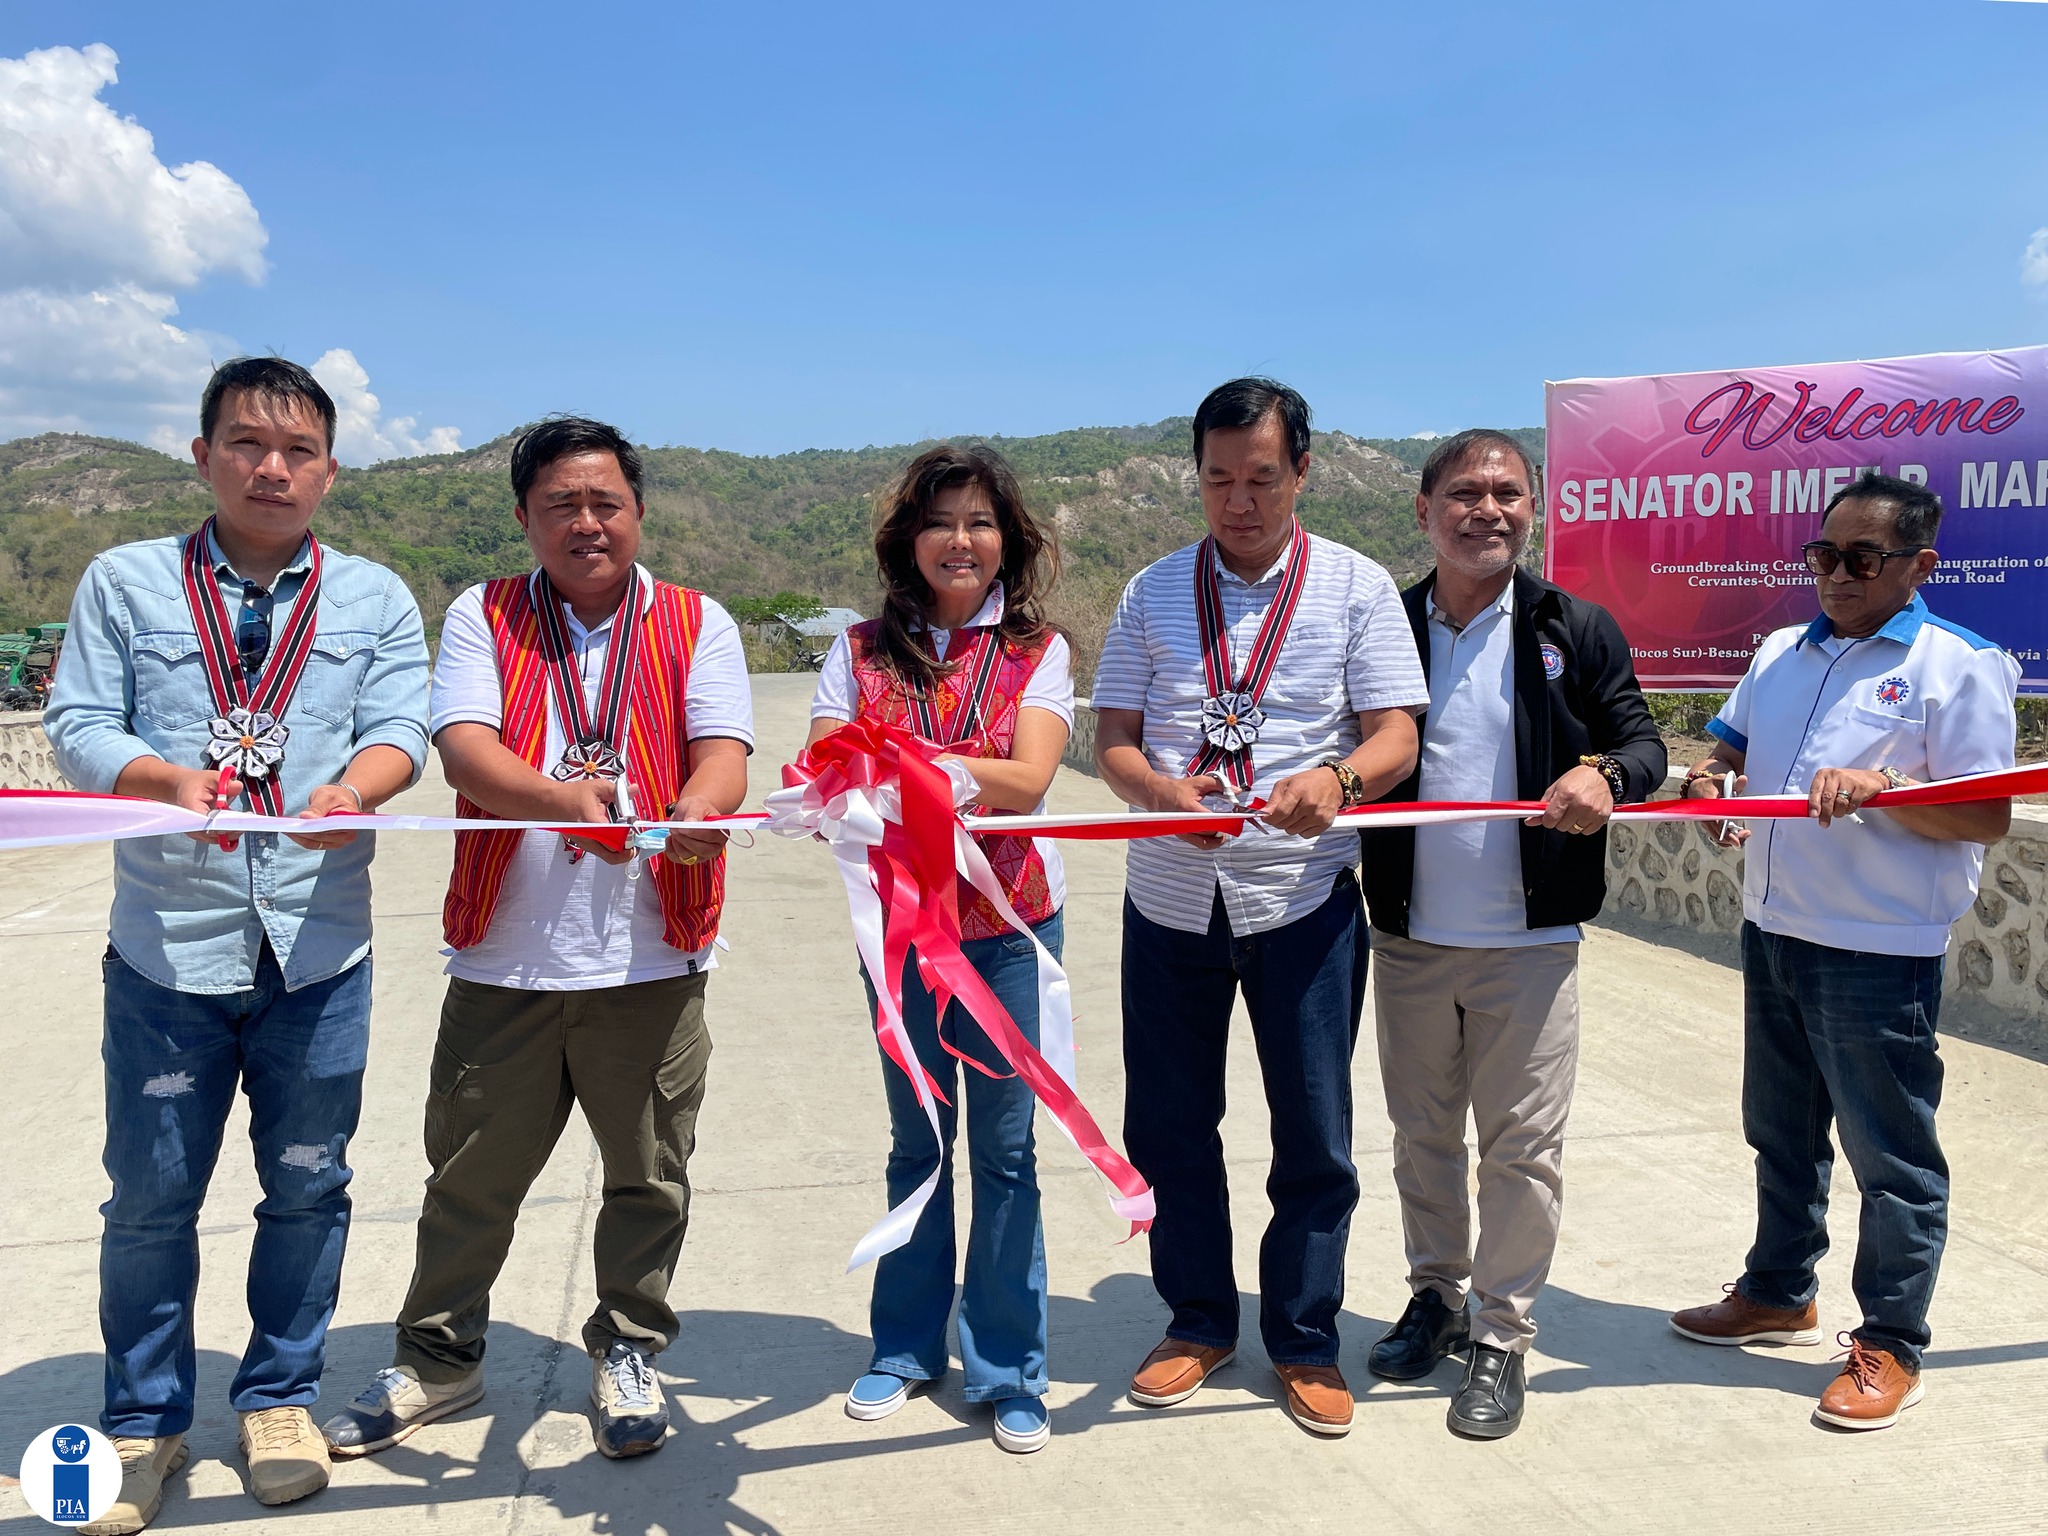 PIA - Build, Better, More program reaches Ilocos upland residents